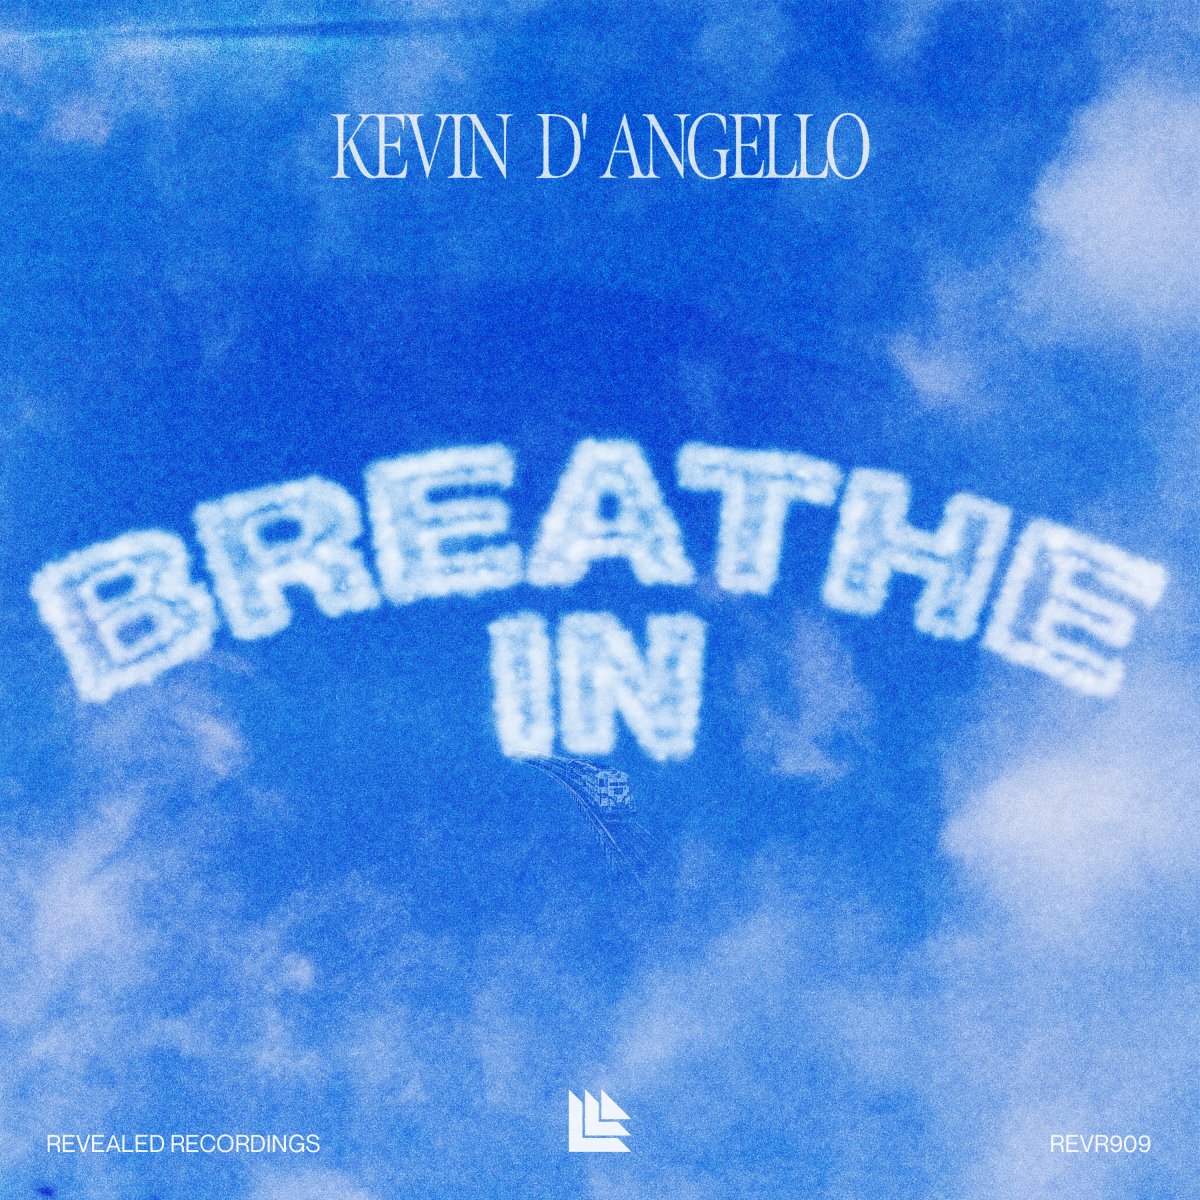 Breathe In - Kevin D'Angello⁠ 